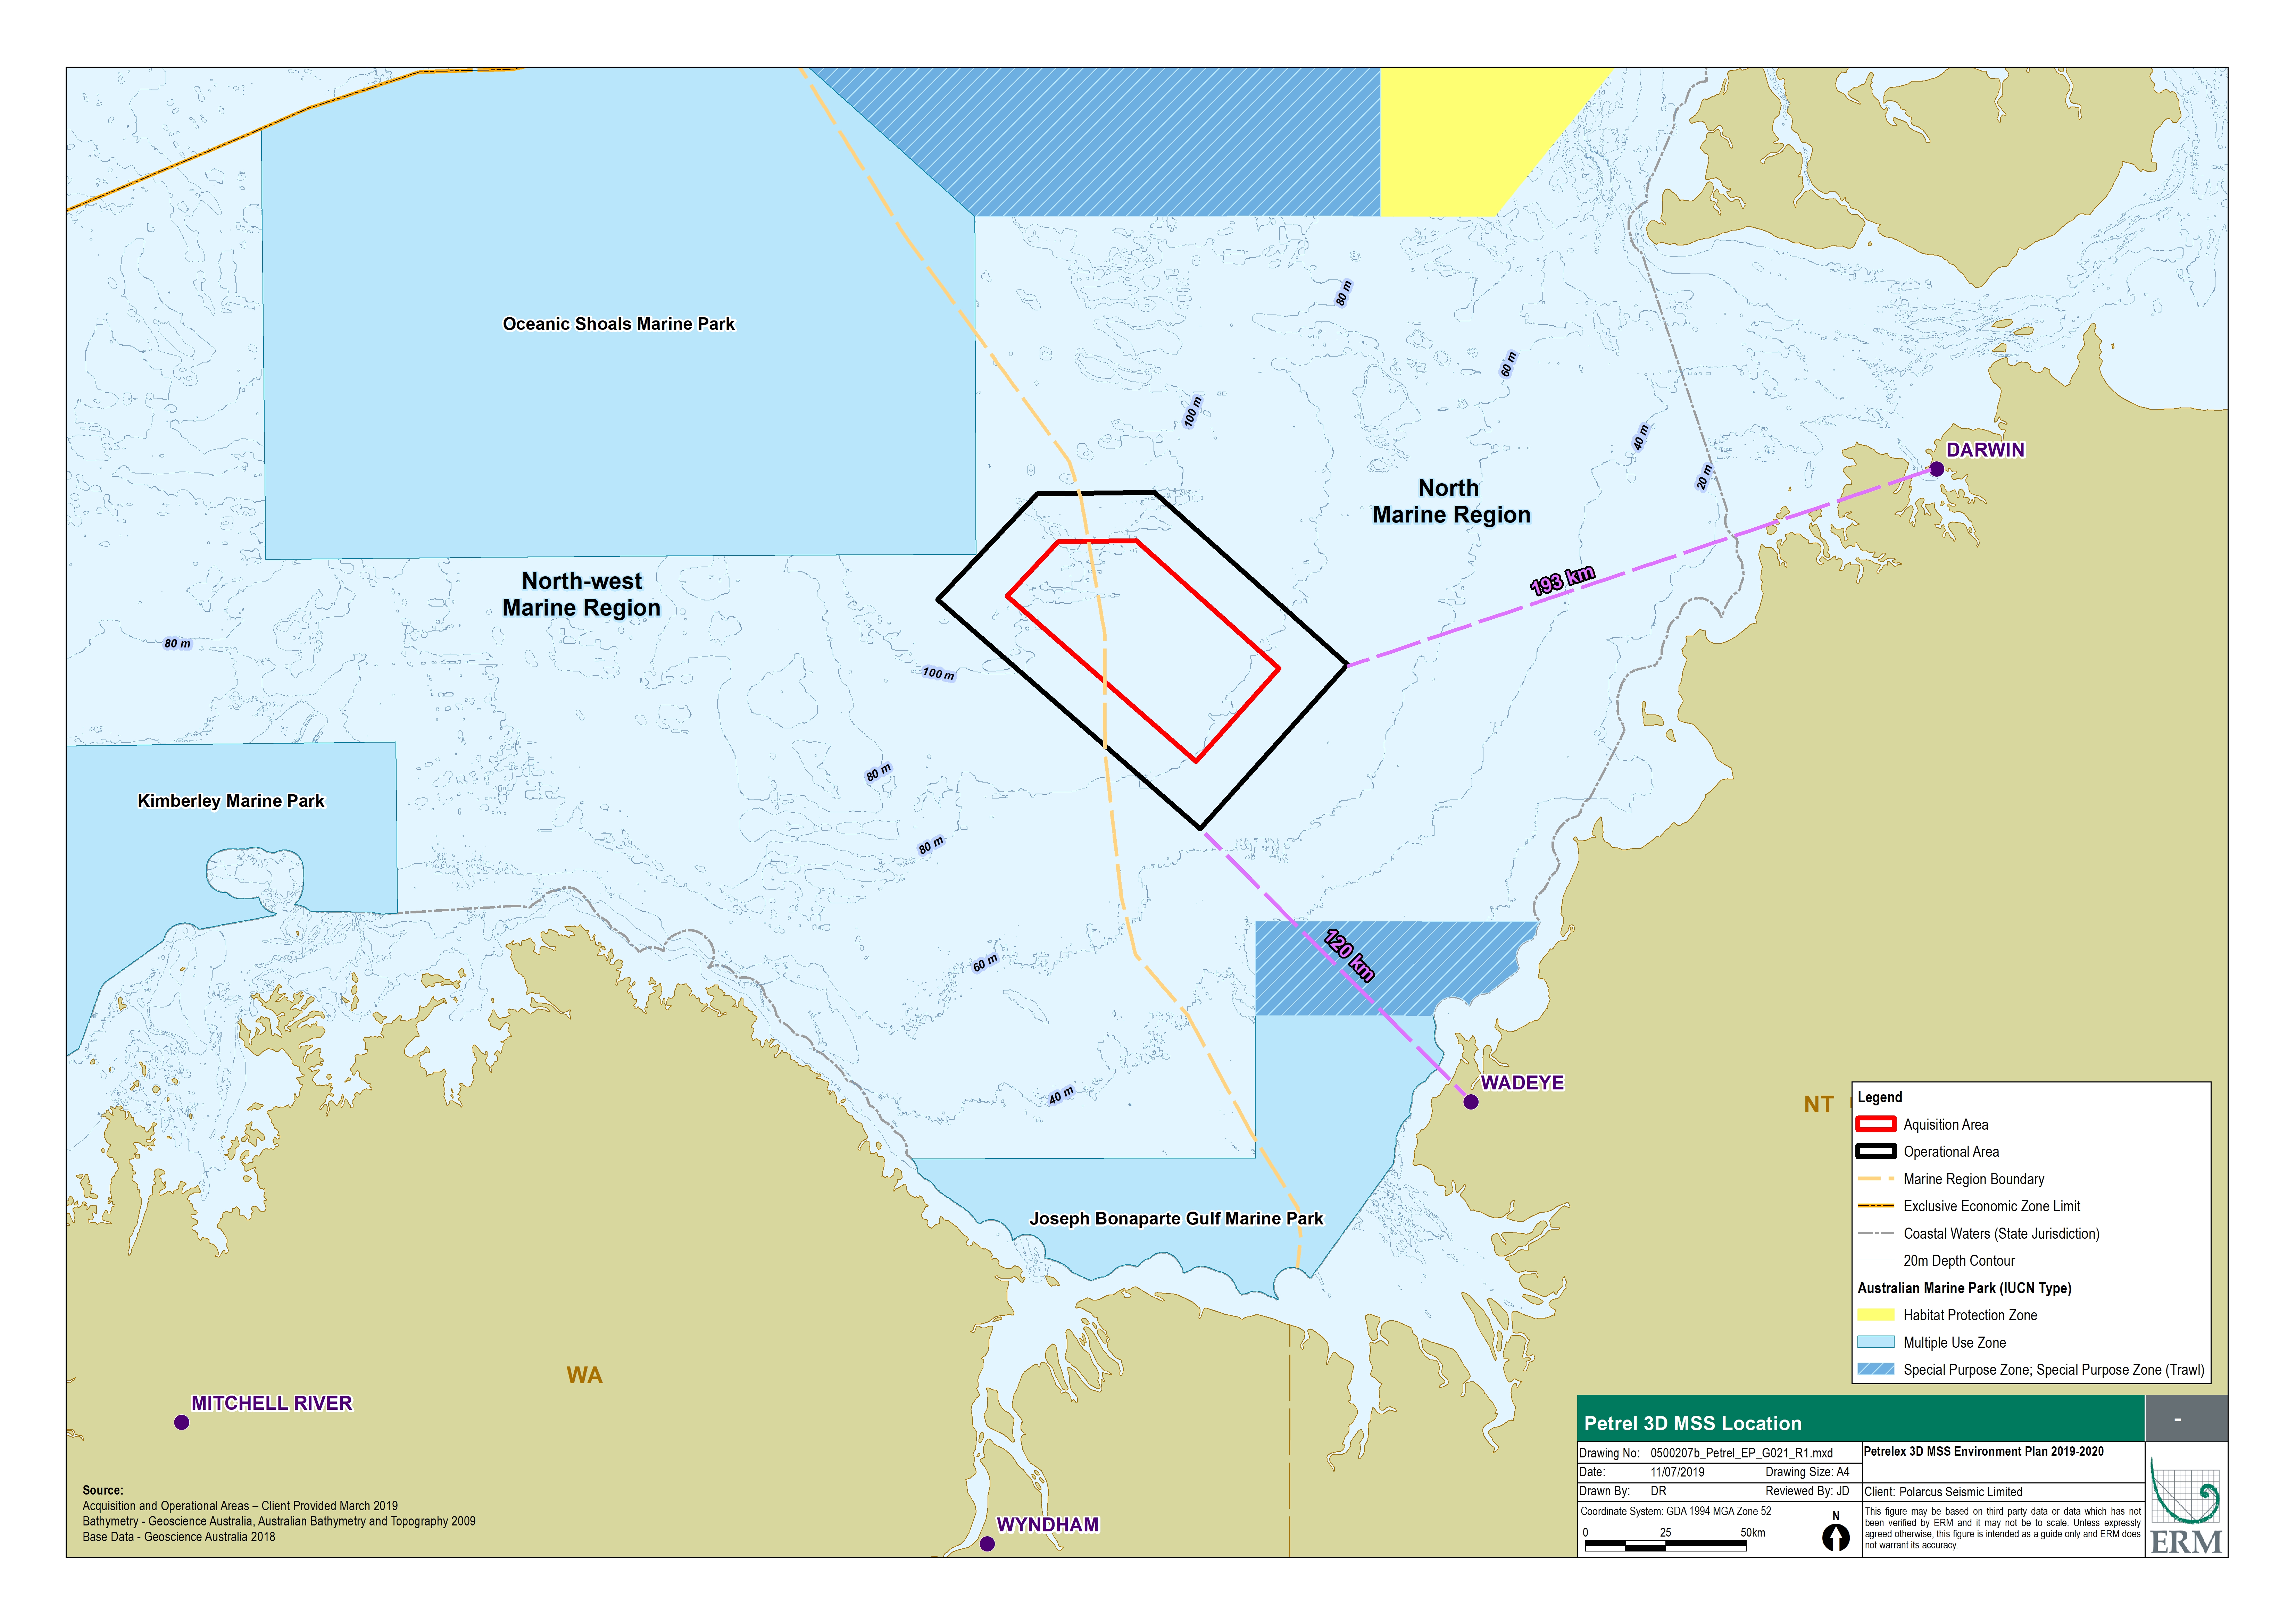 Location map - Activity: Polarcus Petrelex 3D Marine Seismic Survey  (refer to description)